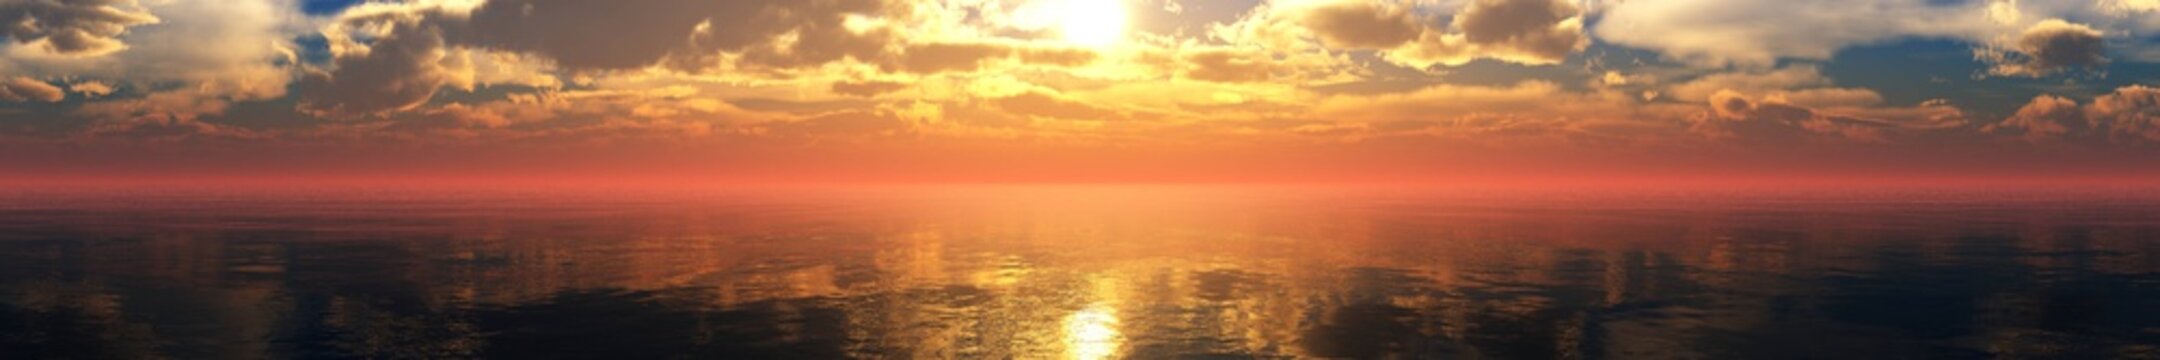 Panorama of a beautiful sea sunset, sunrise over the water,
